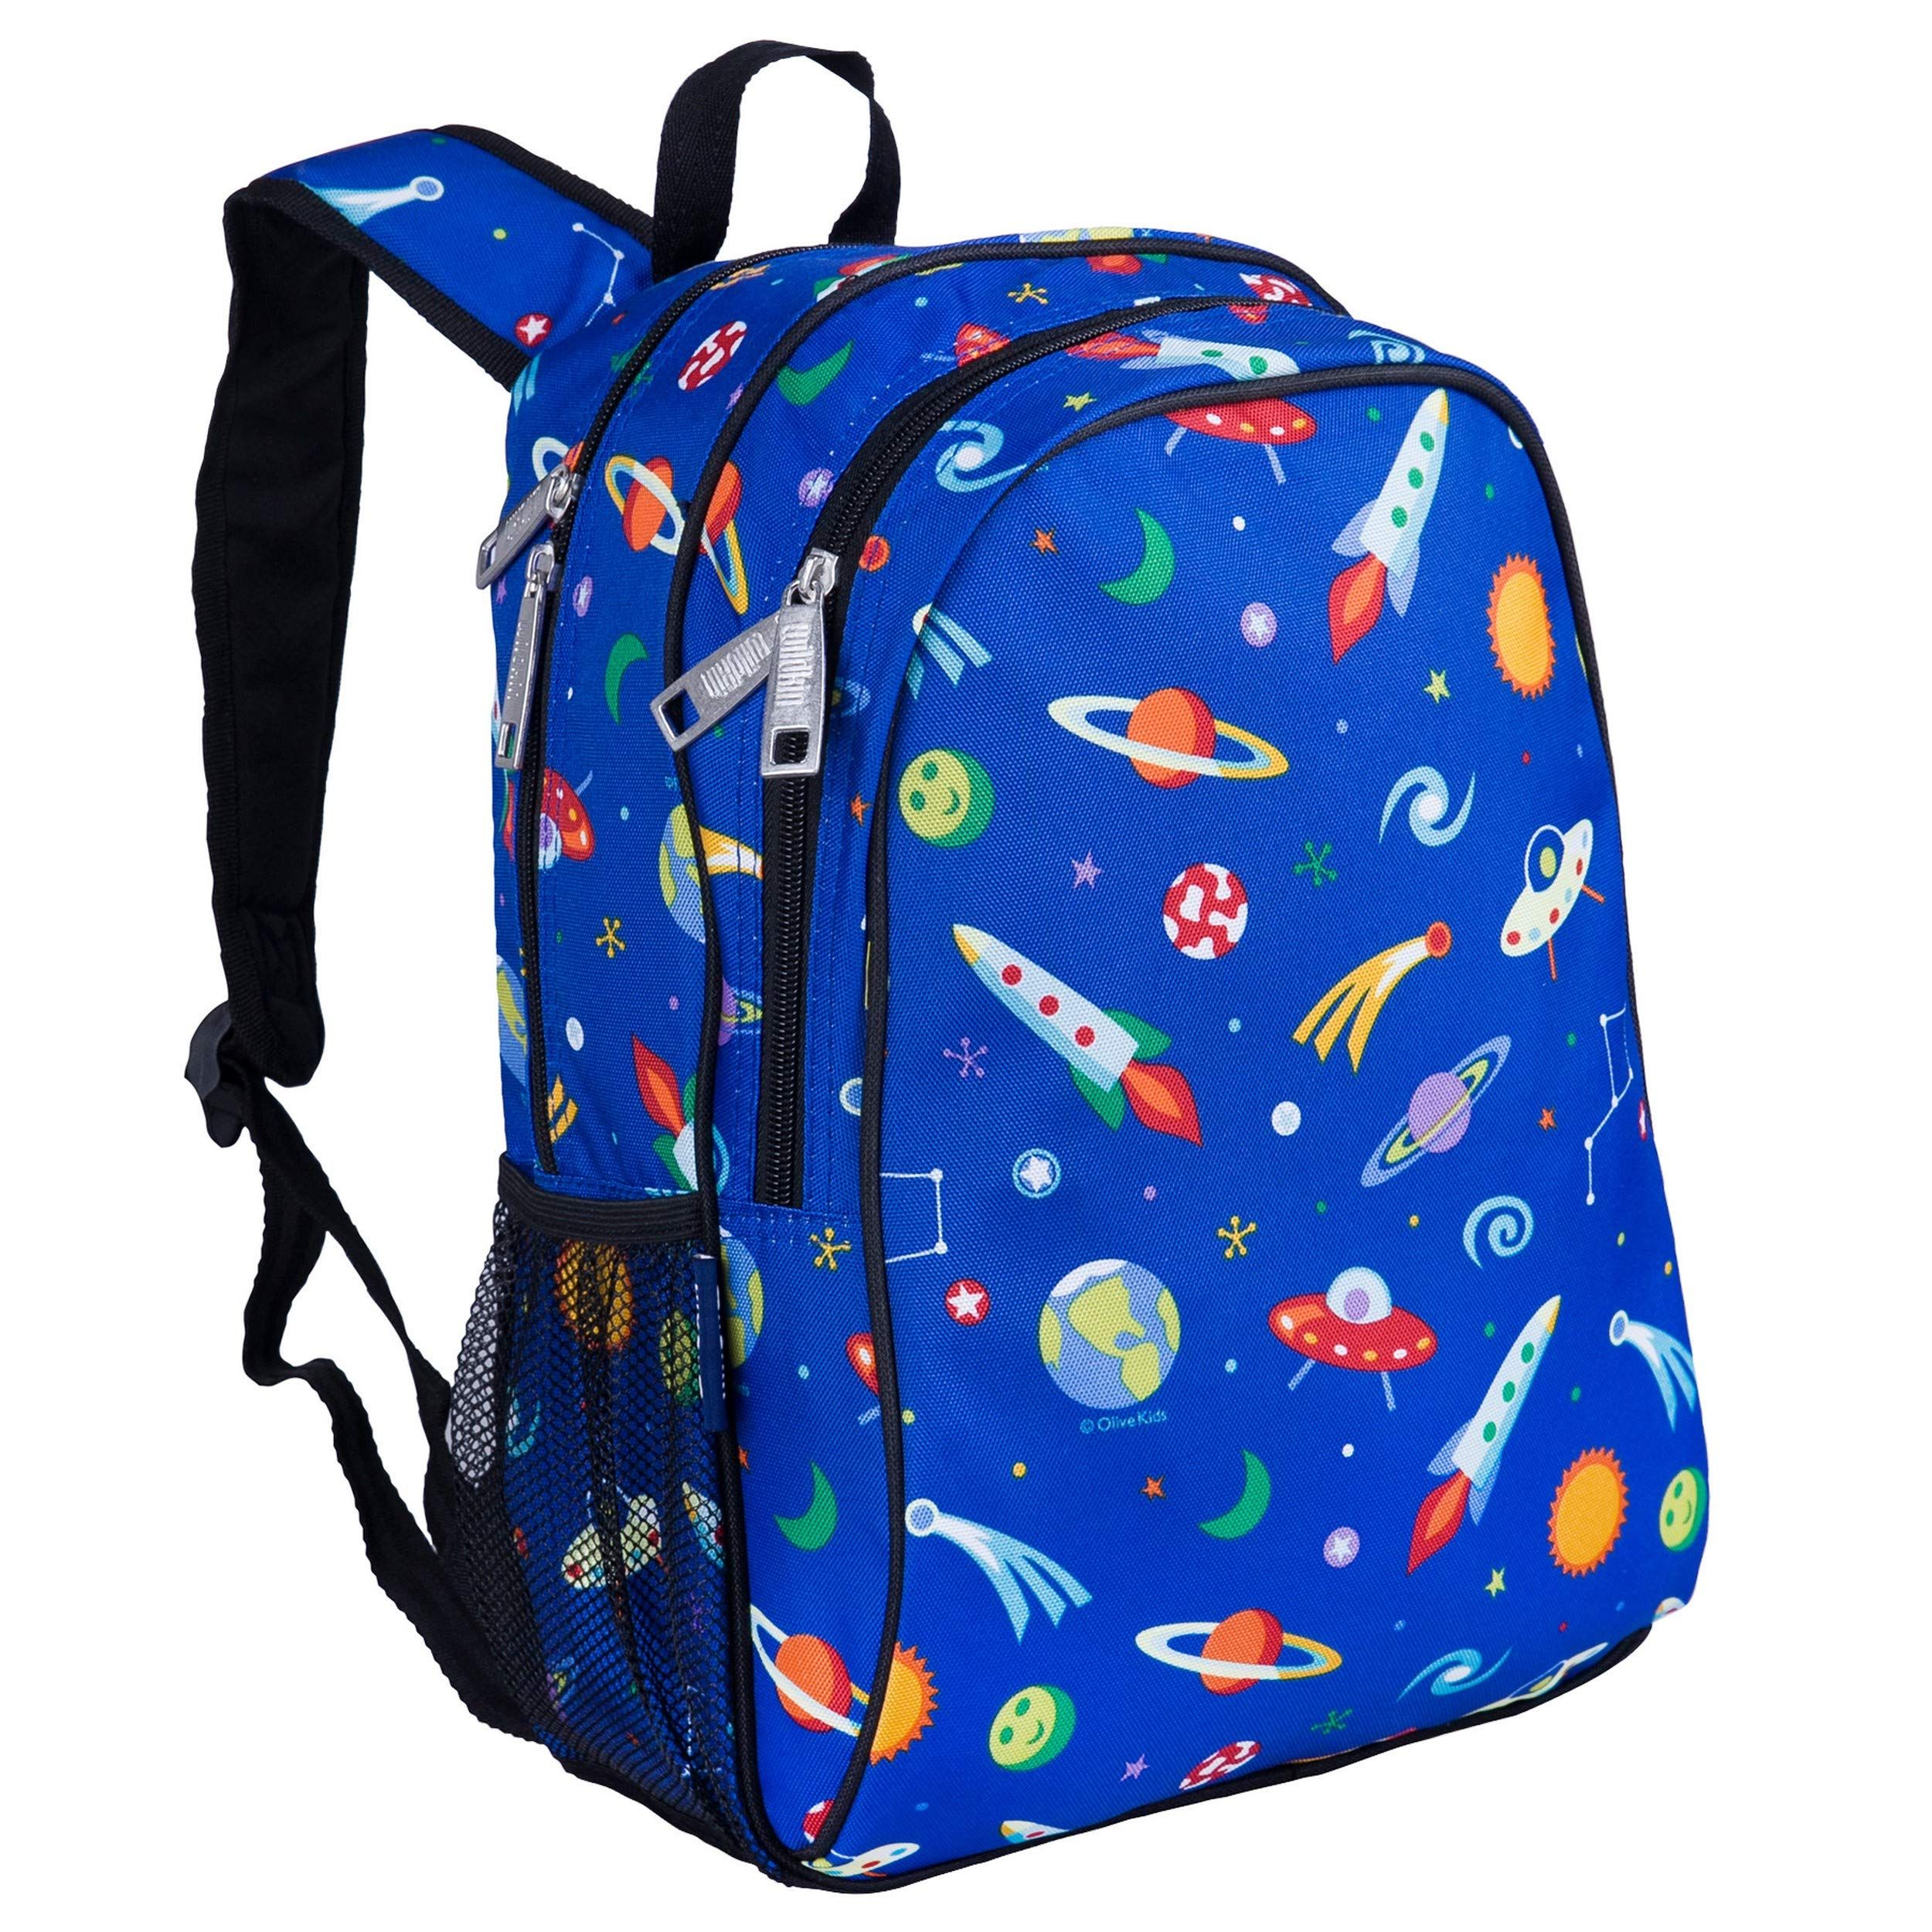 Kids School Bags and Backpacks Online in UAE & Dubai | FirstCry.ae